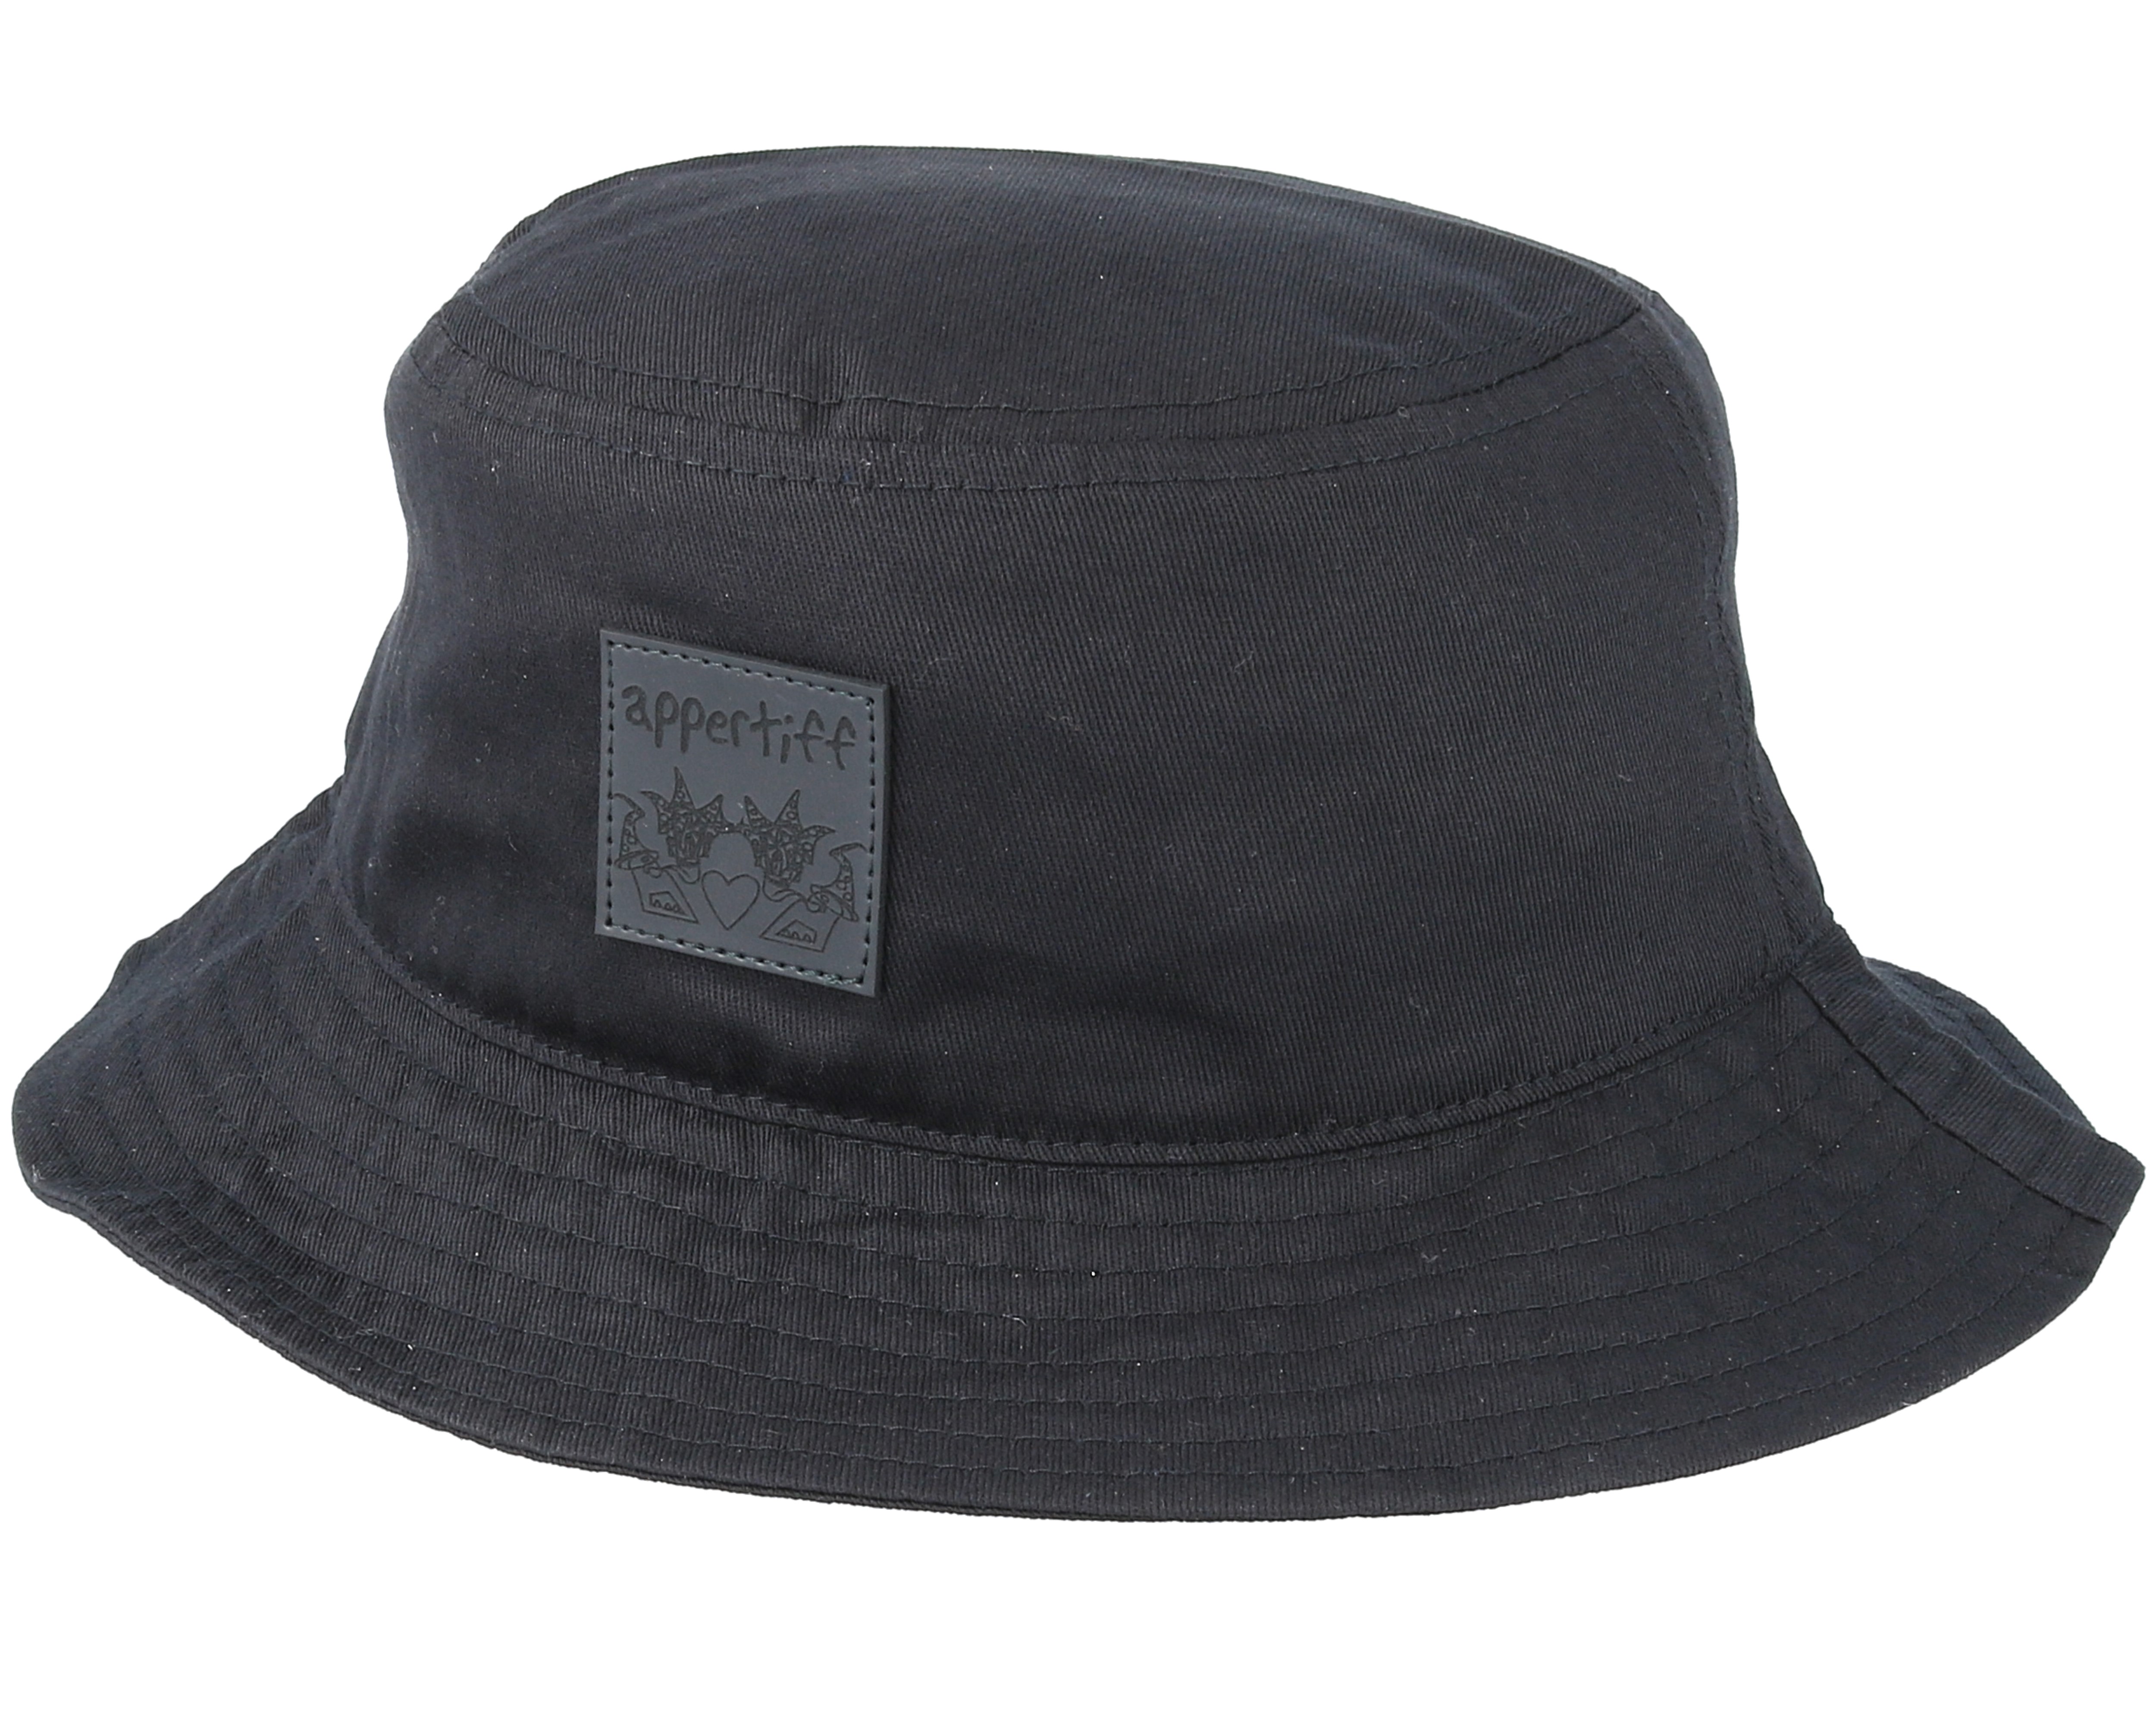 Black Bucket - Appertiff hats | Hatstore.co.uk